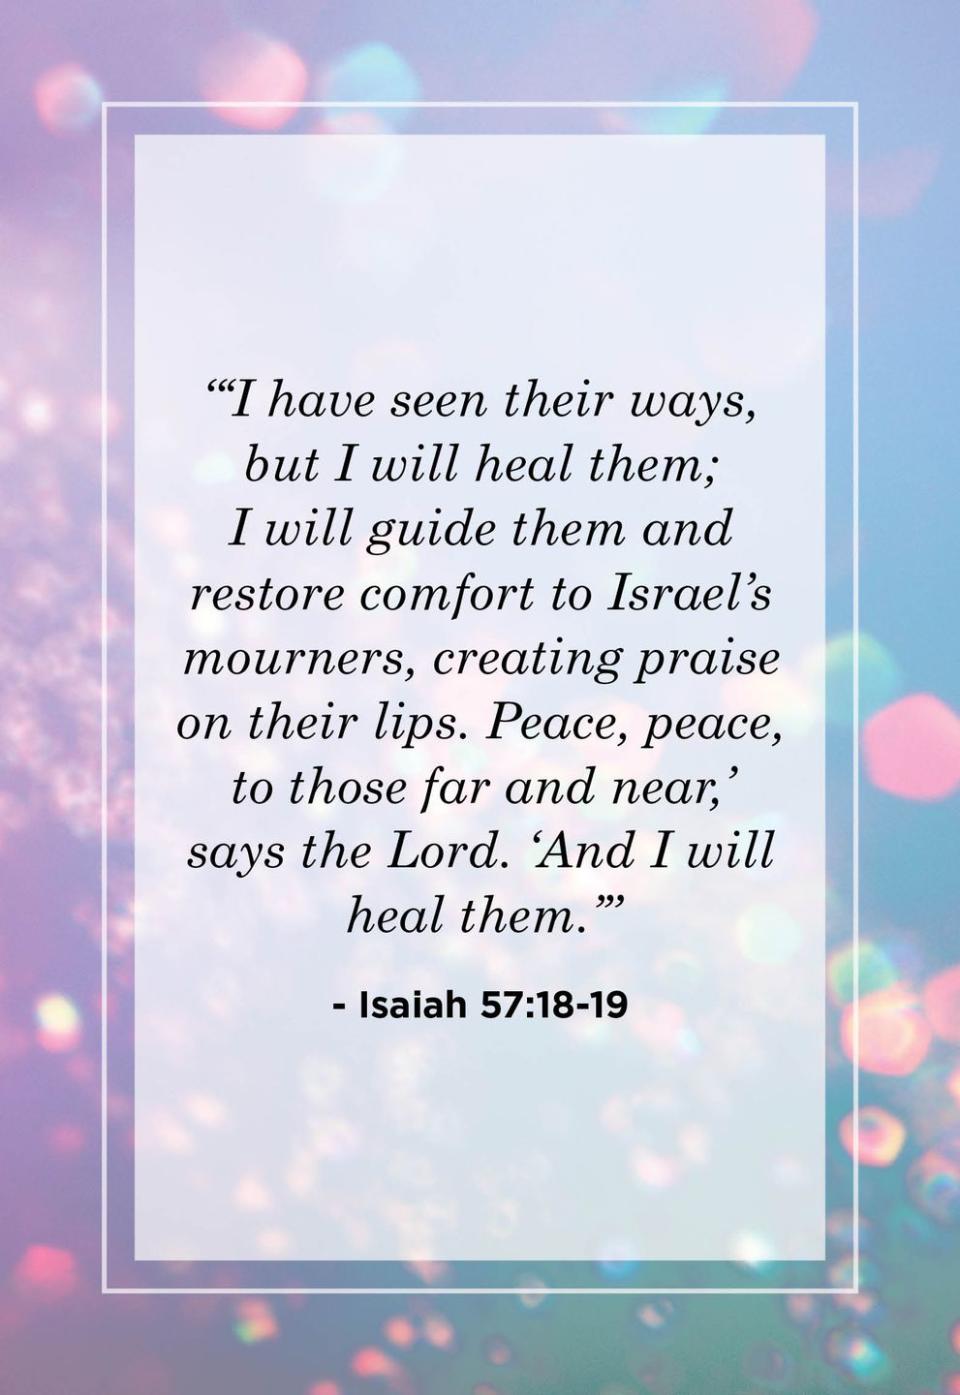 22) Isaiah 57:18-19